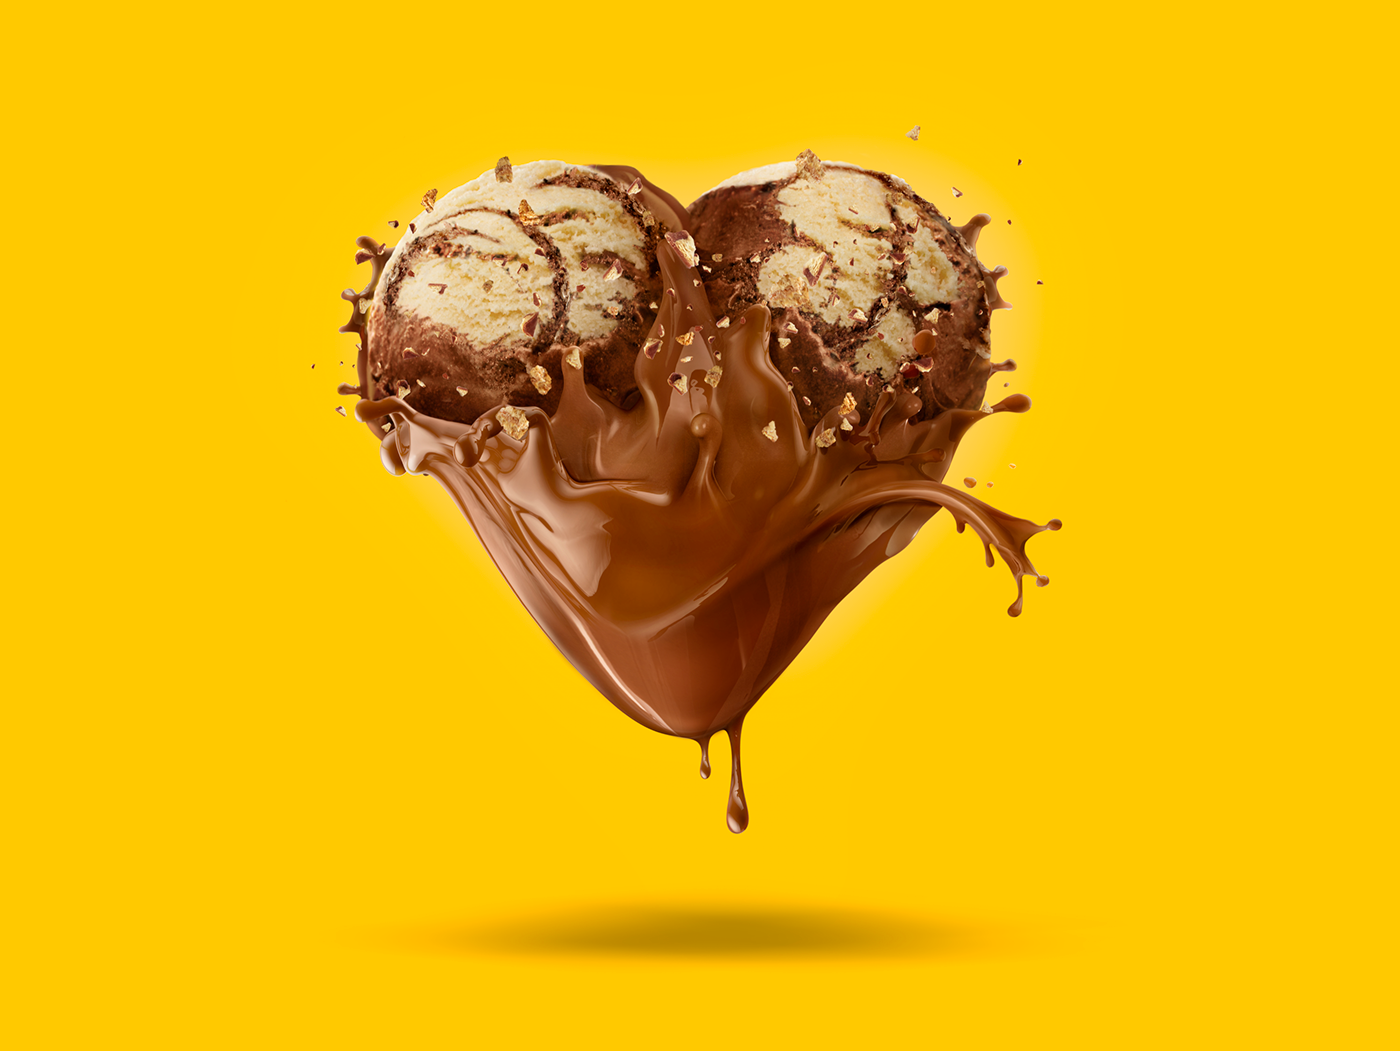 helado icescream chocolate splash fluid chocolat corazon heart